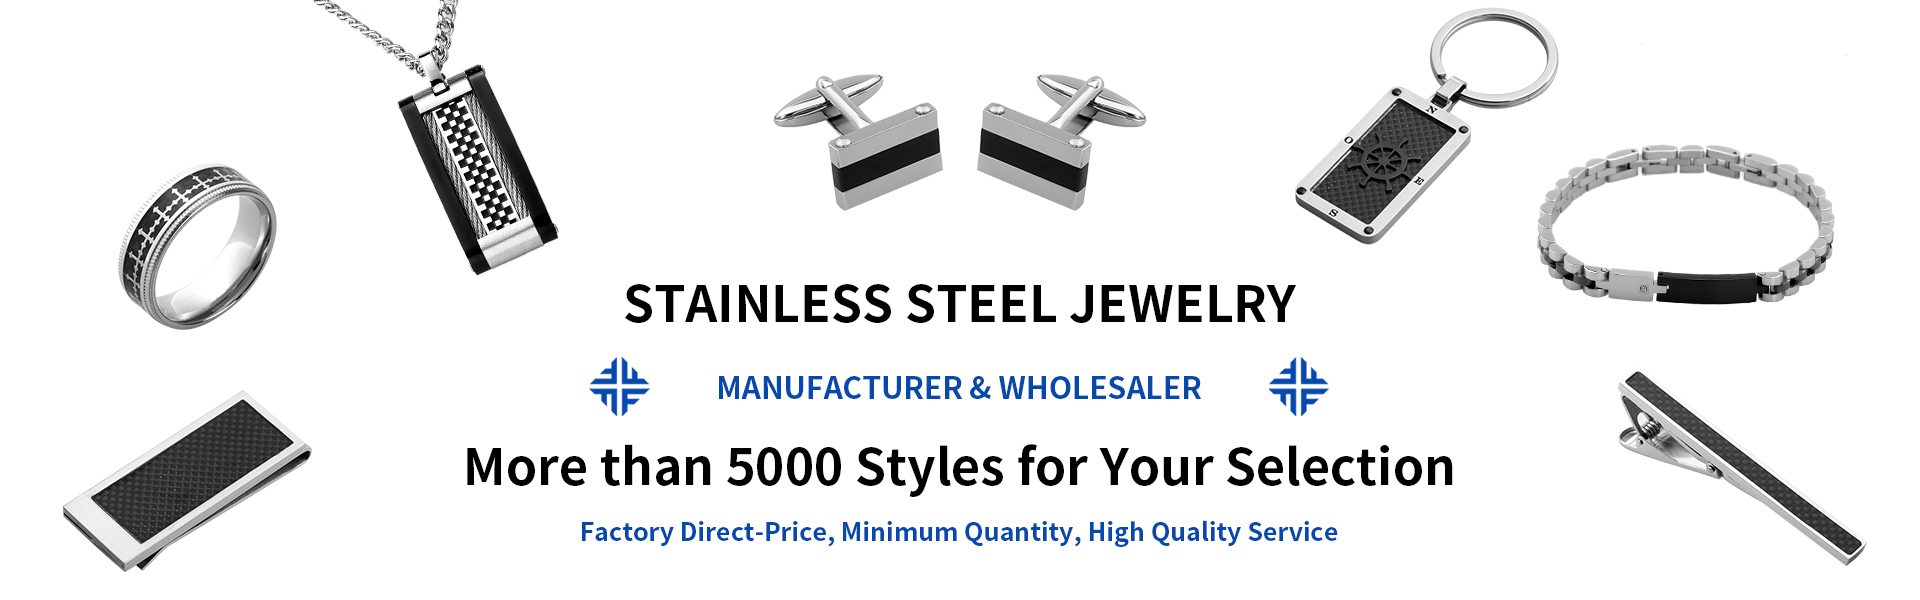 rustfrit stål smykker, mode smykker og tilbehør, smykker grossist og producent,Dongguan Fullten Jewelry Co., Ltd